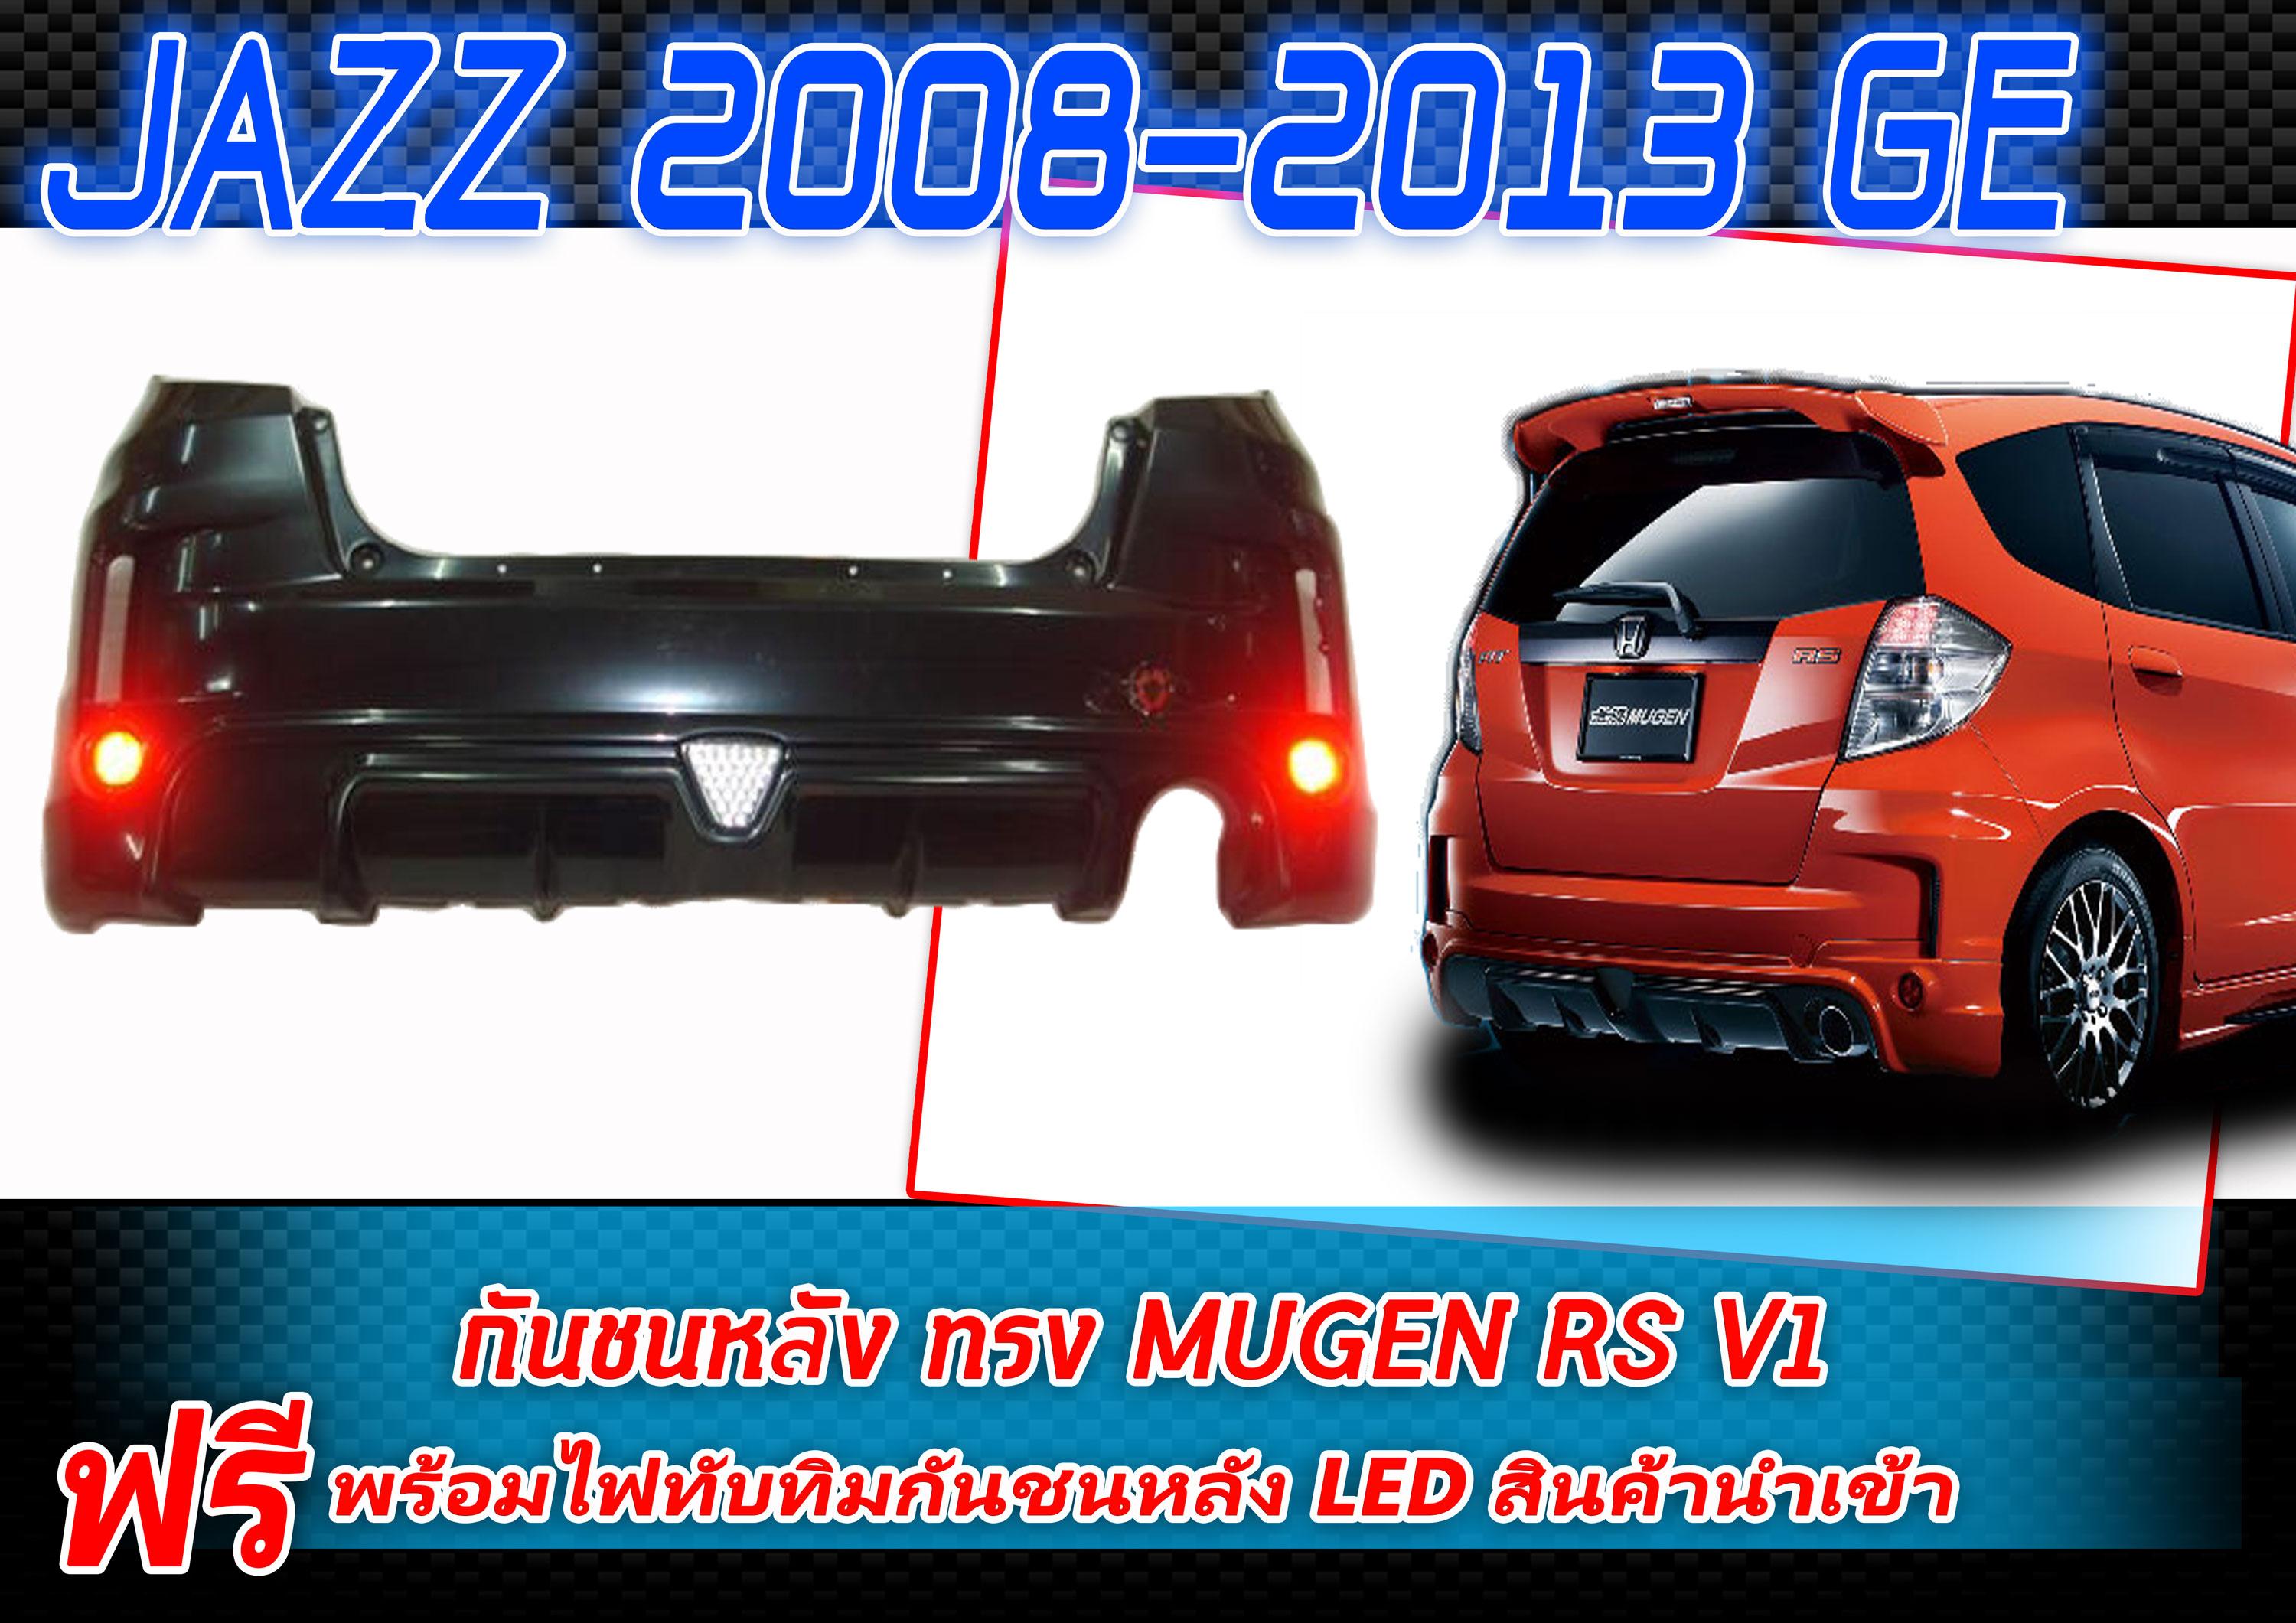 JAZZ 2008 2009 2010 2011 2012 2013 GE กันชนหลัง ทรง MUGEN RS V1 สินค้านำเข้า